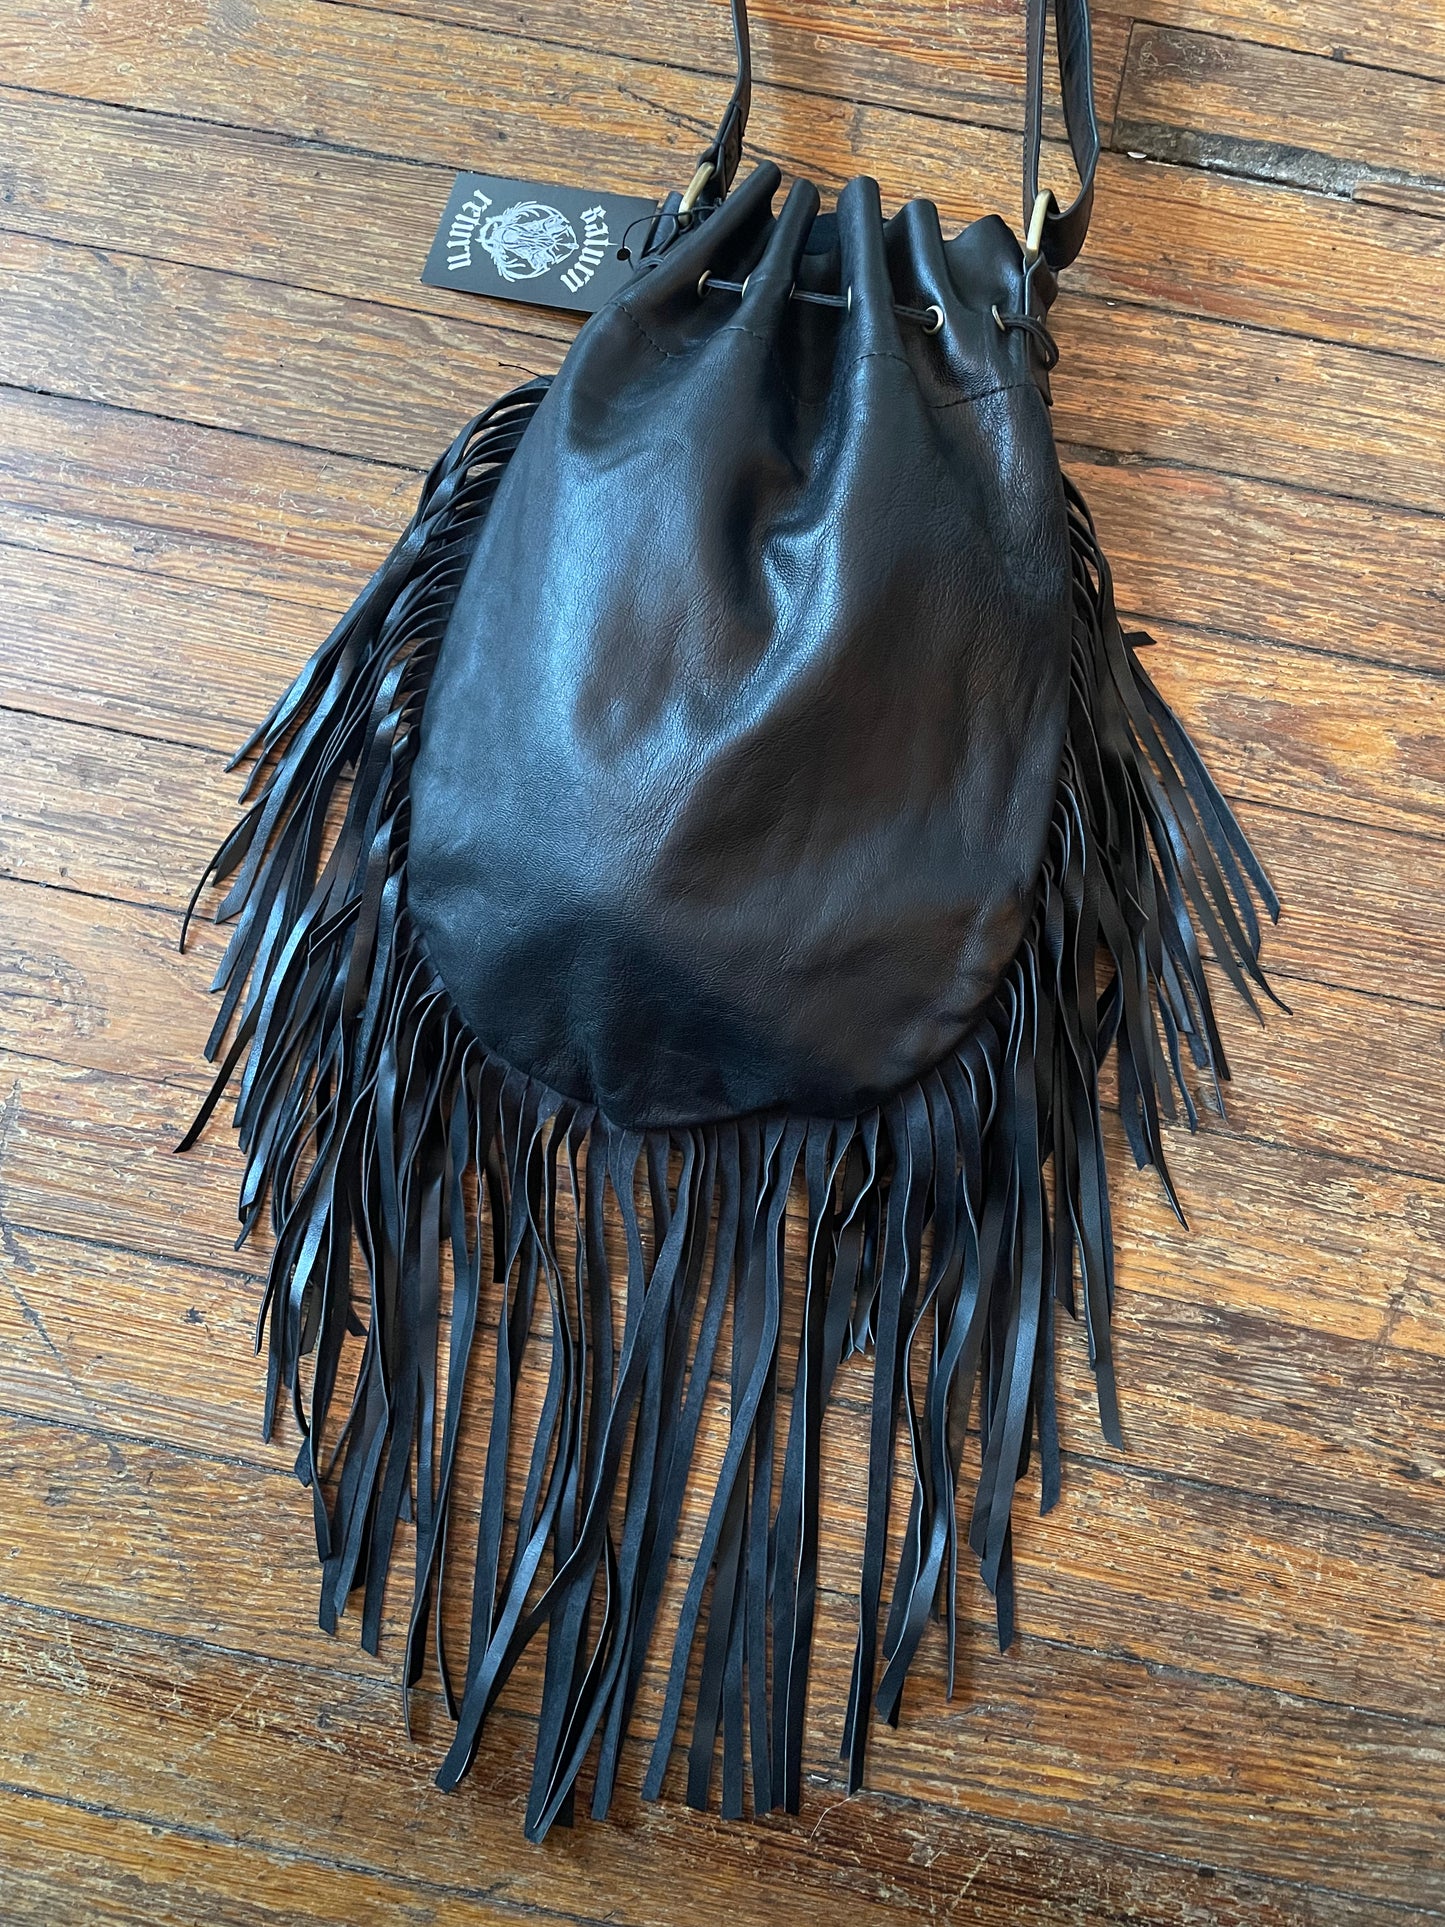 NWOT Soft Black Leather Fringe Beaded Drawstring Bag